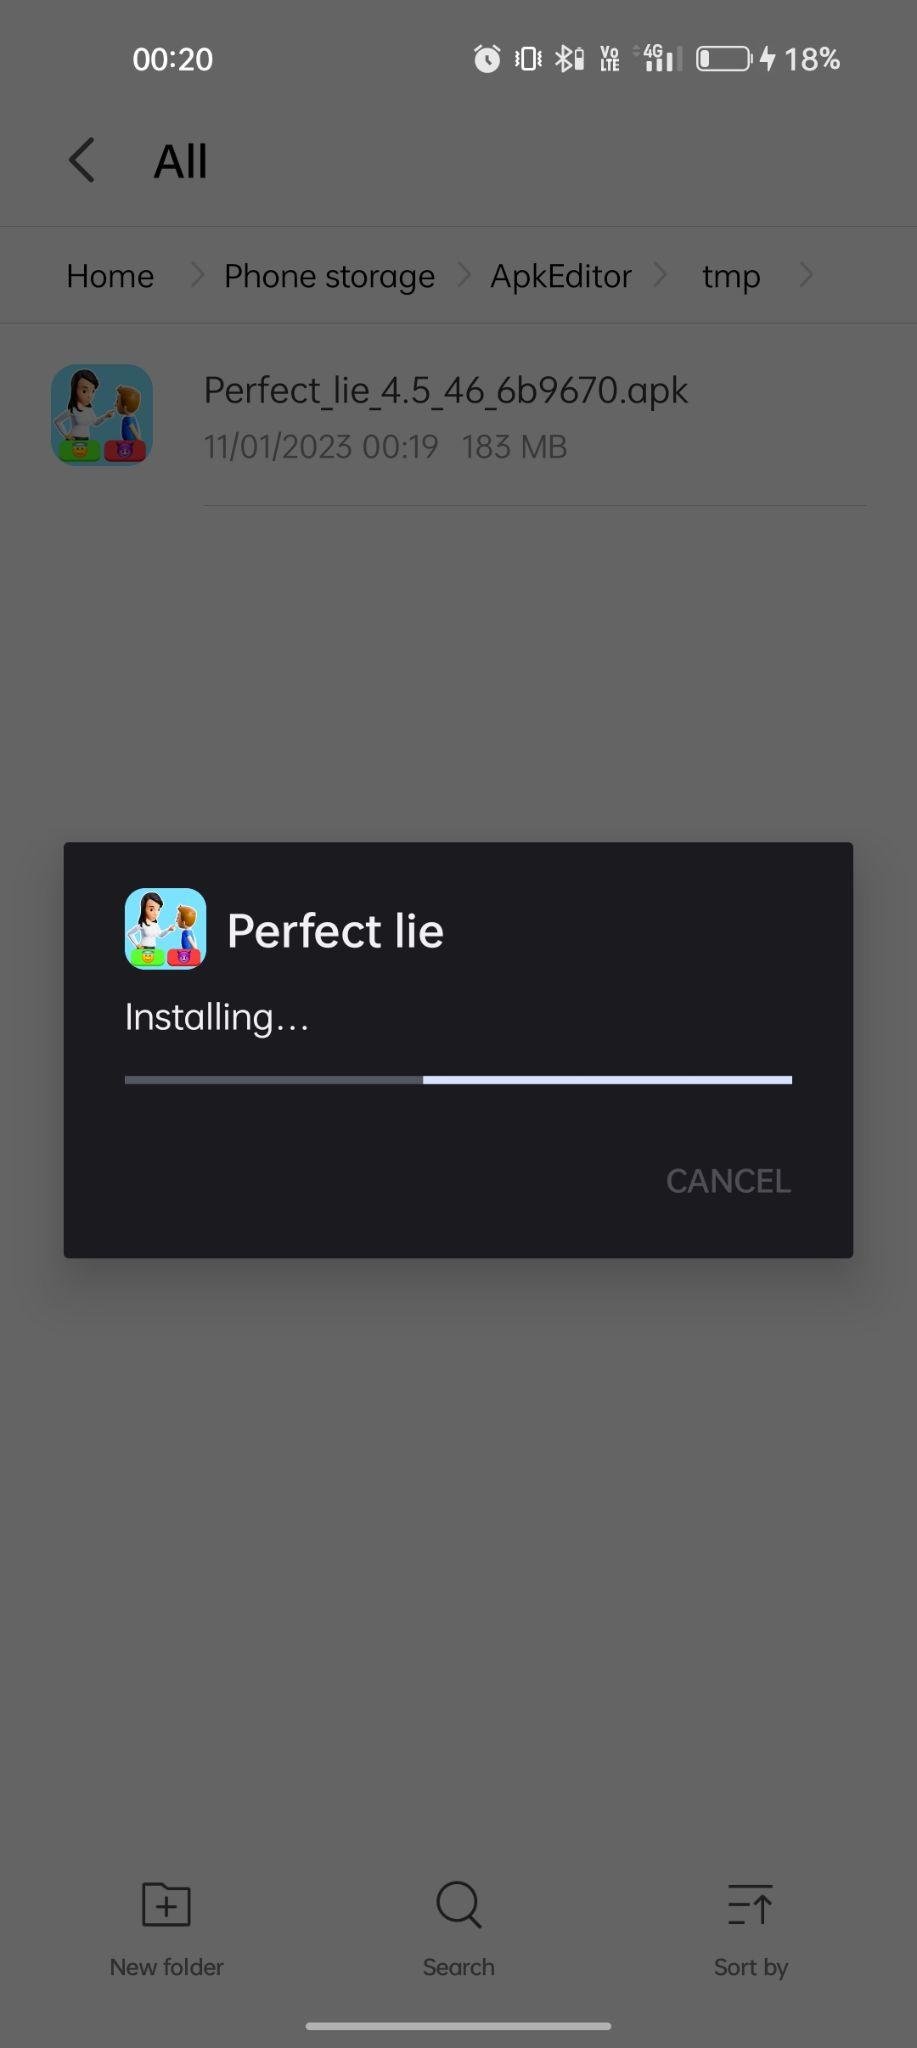 Perfect Lie apk installing